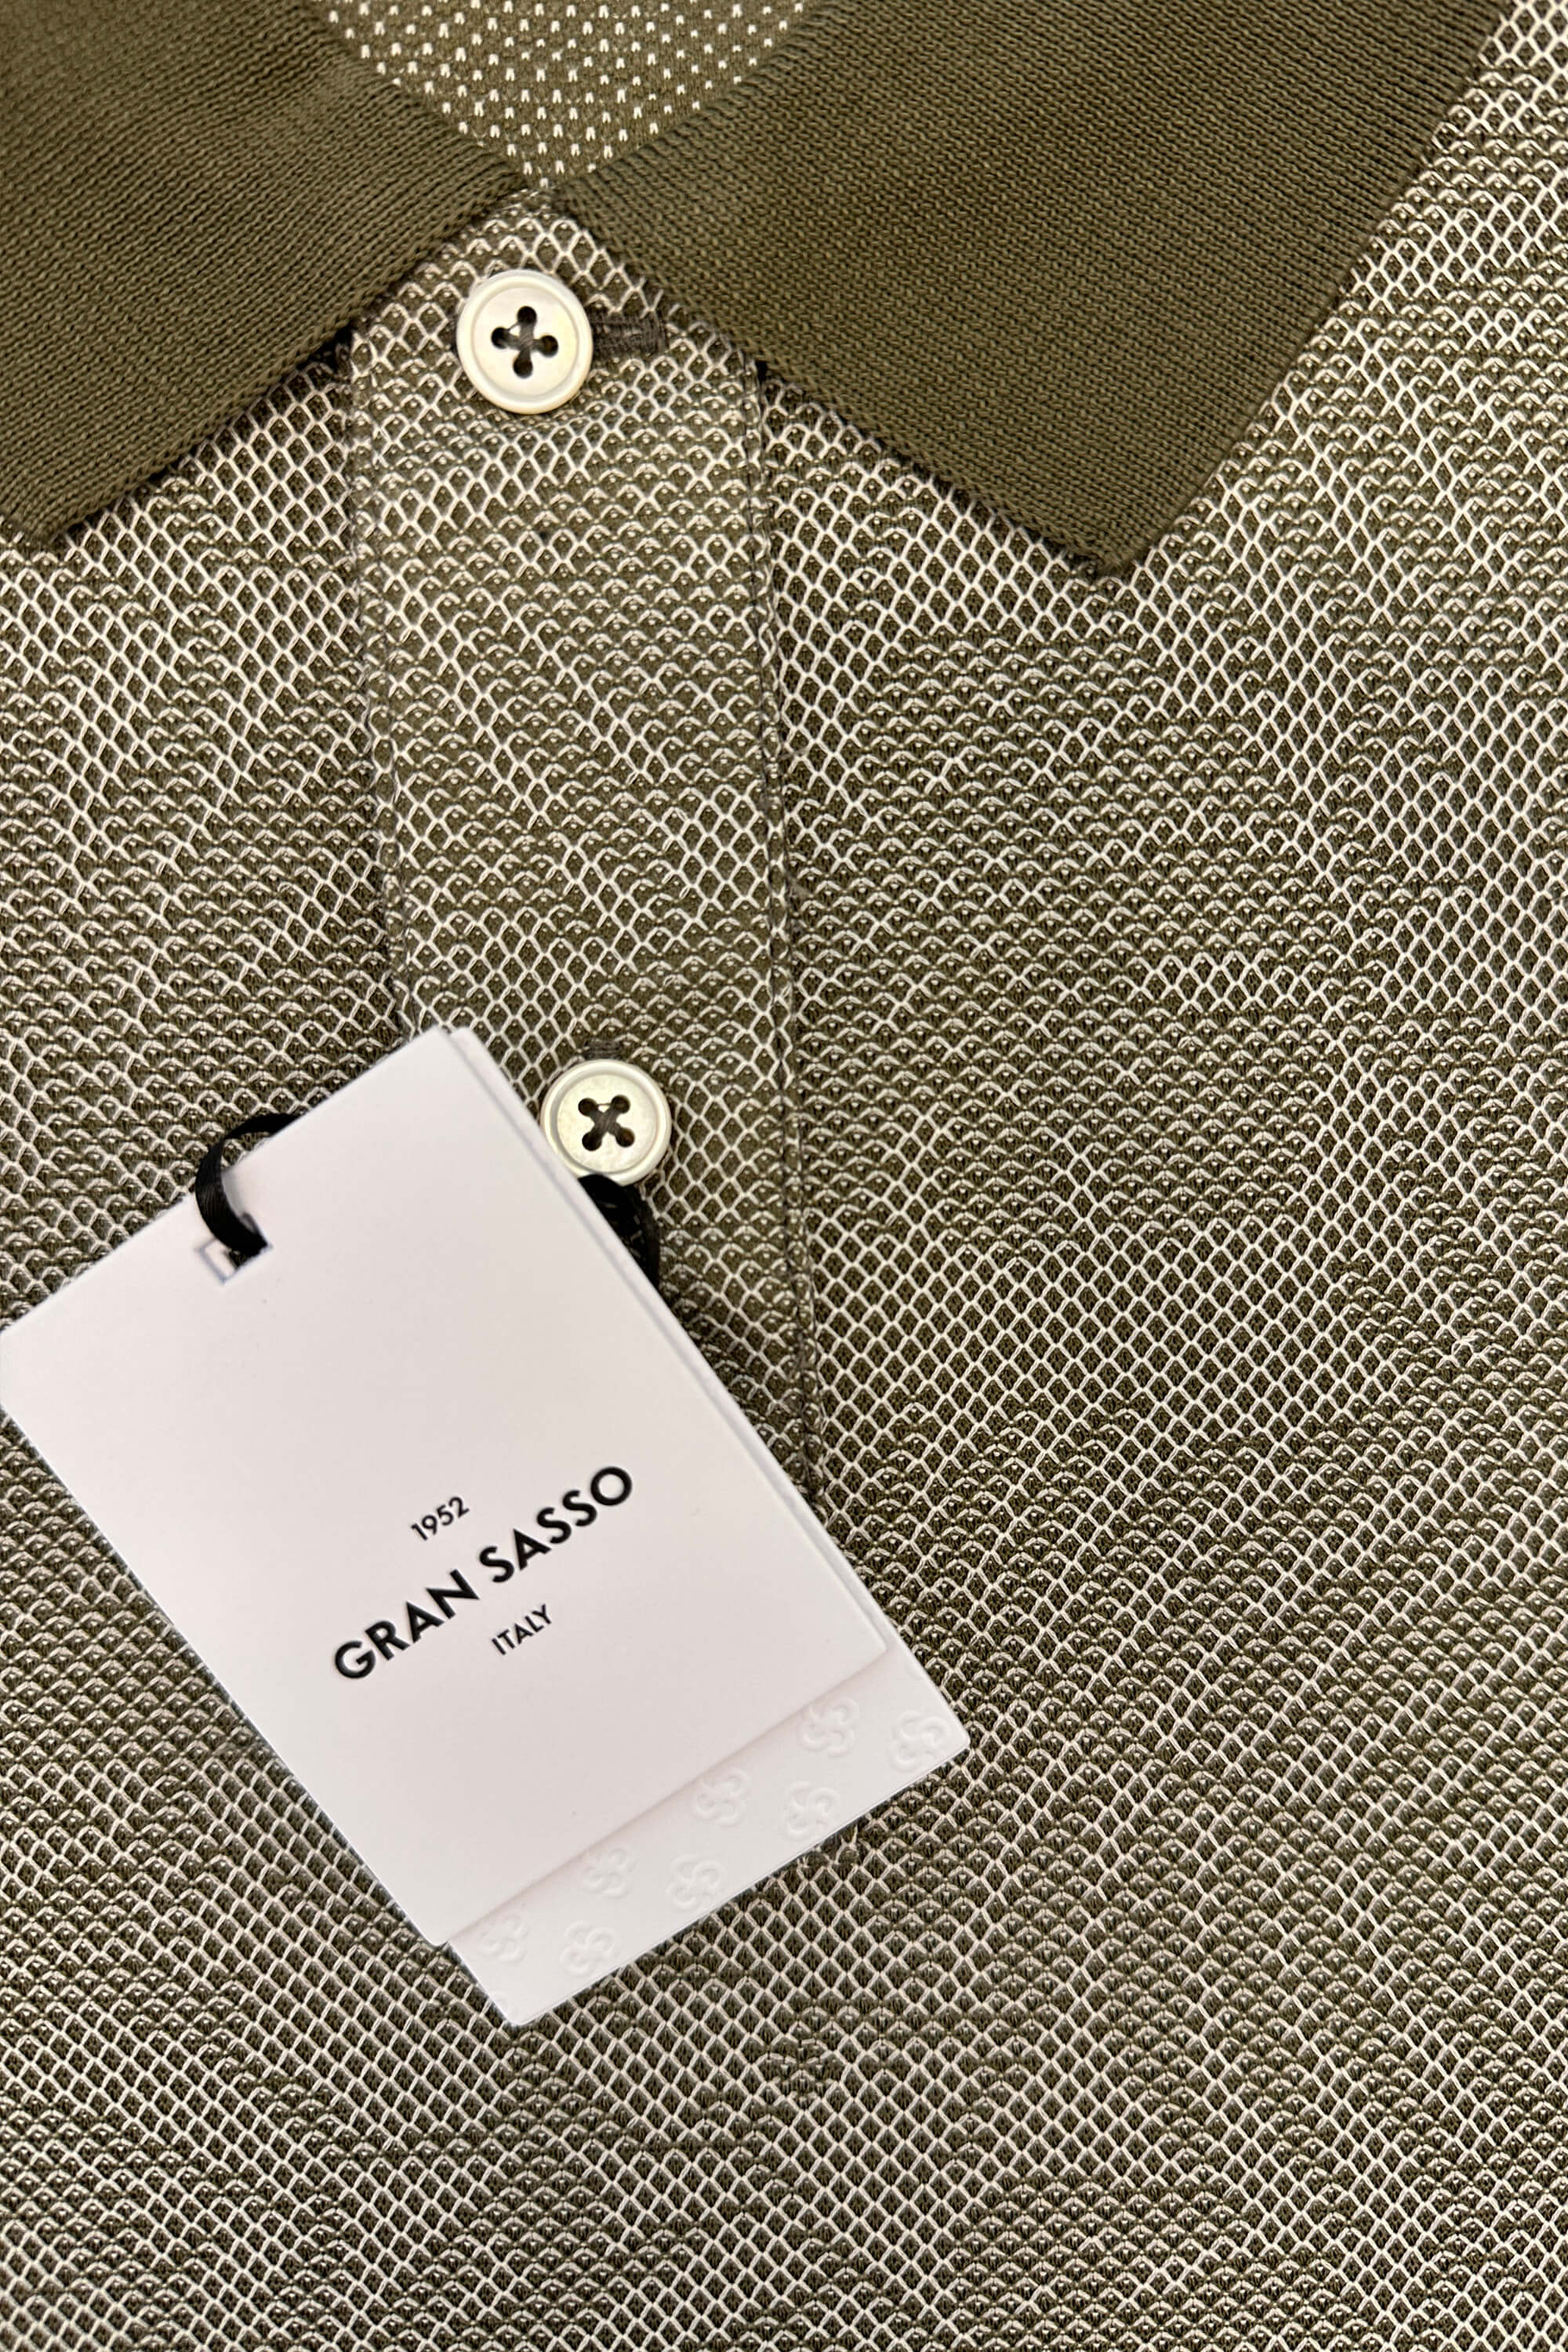 Gran Sasso Knit Print Leaf Polo Green